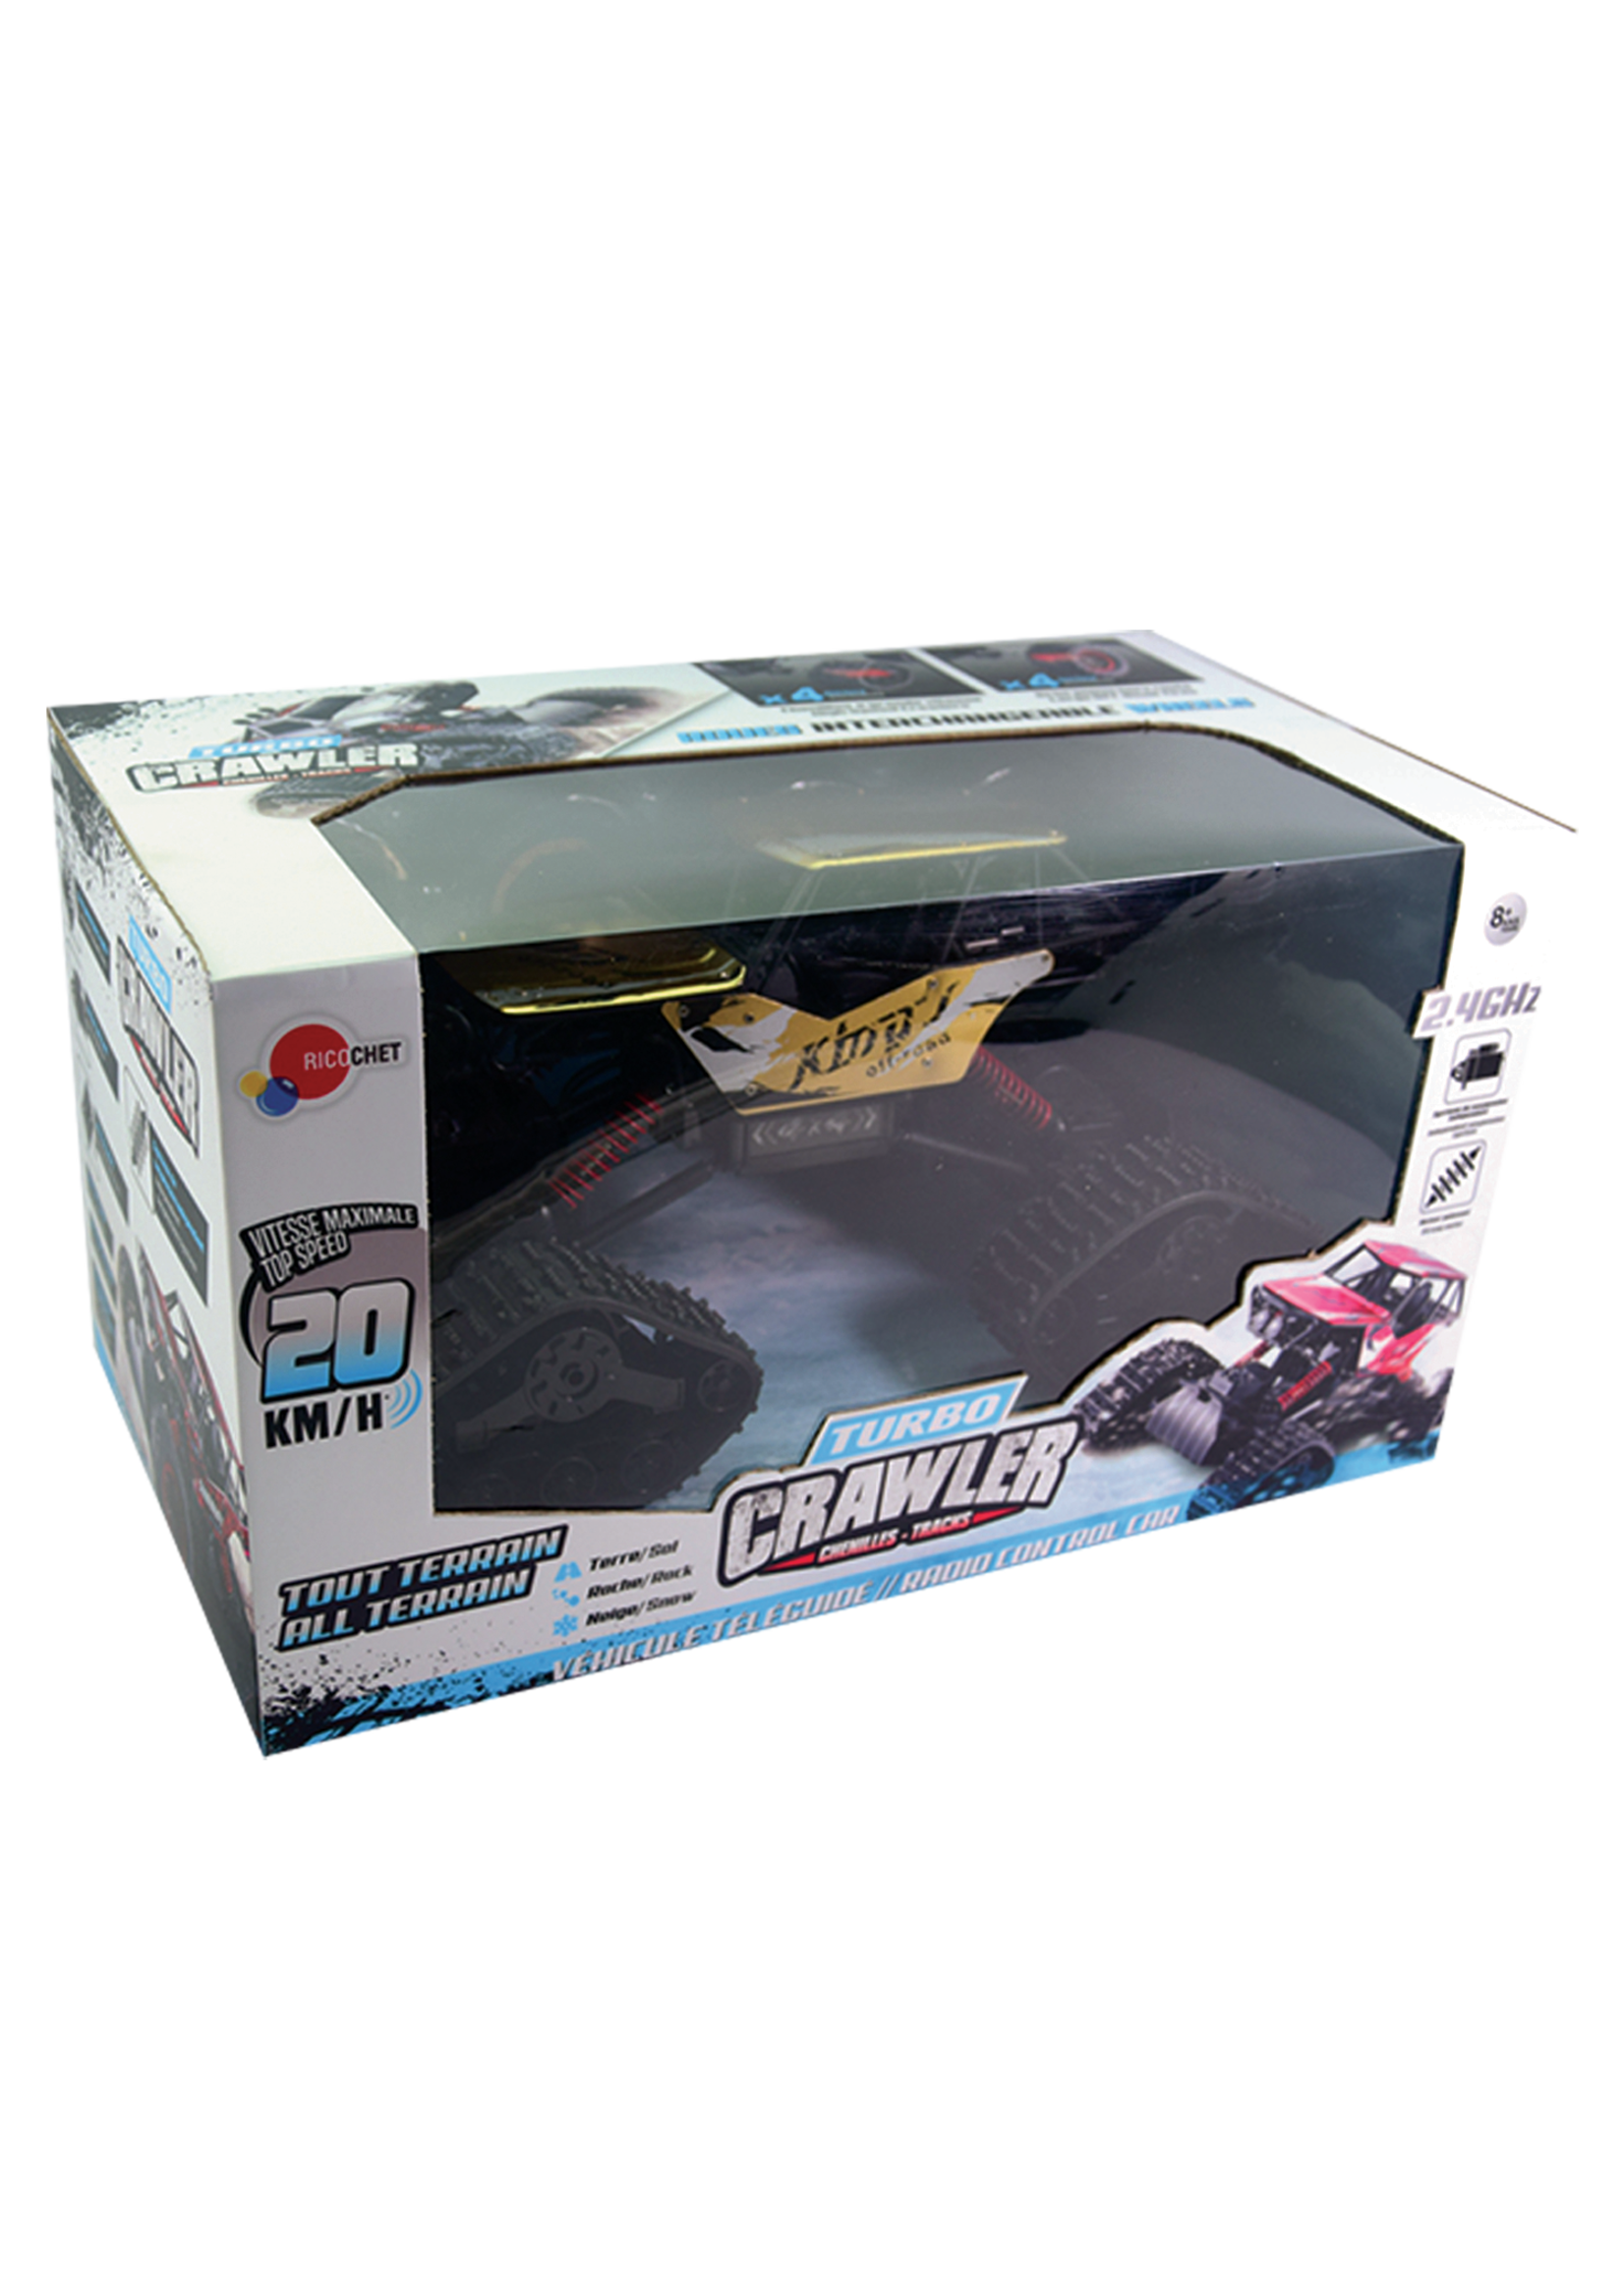 Ricochet Turbo Crawler chenilles - metal